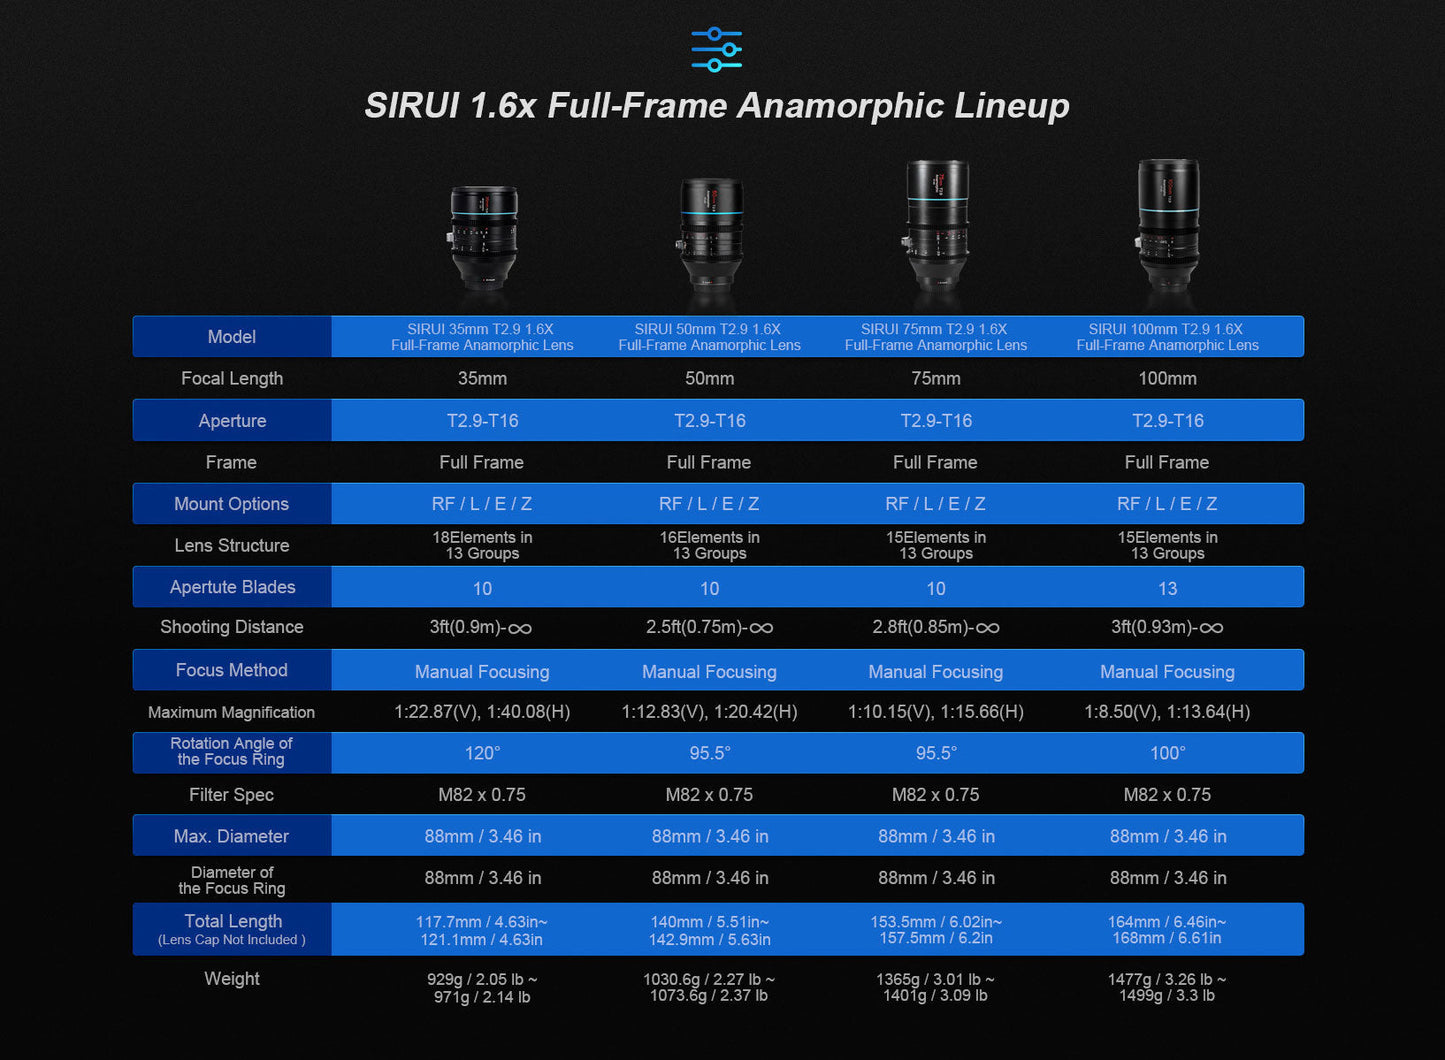 SIRUI Venus 35mm + 50mm + 75mm + 100mm + ADP125X - T2.9 1.6x anamorphic full frame lenses + Anamorphic Adapter 1.25x